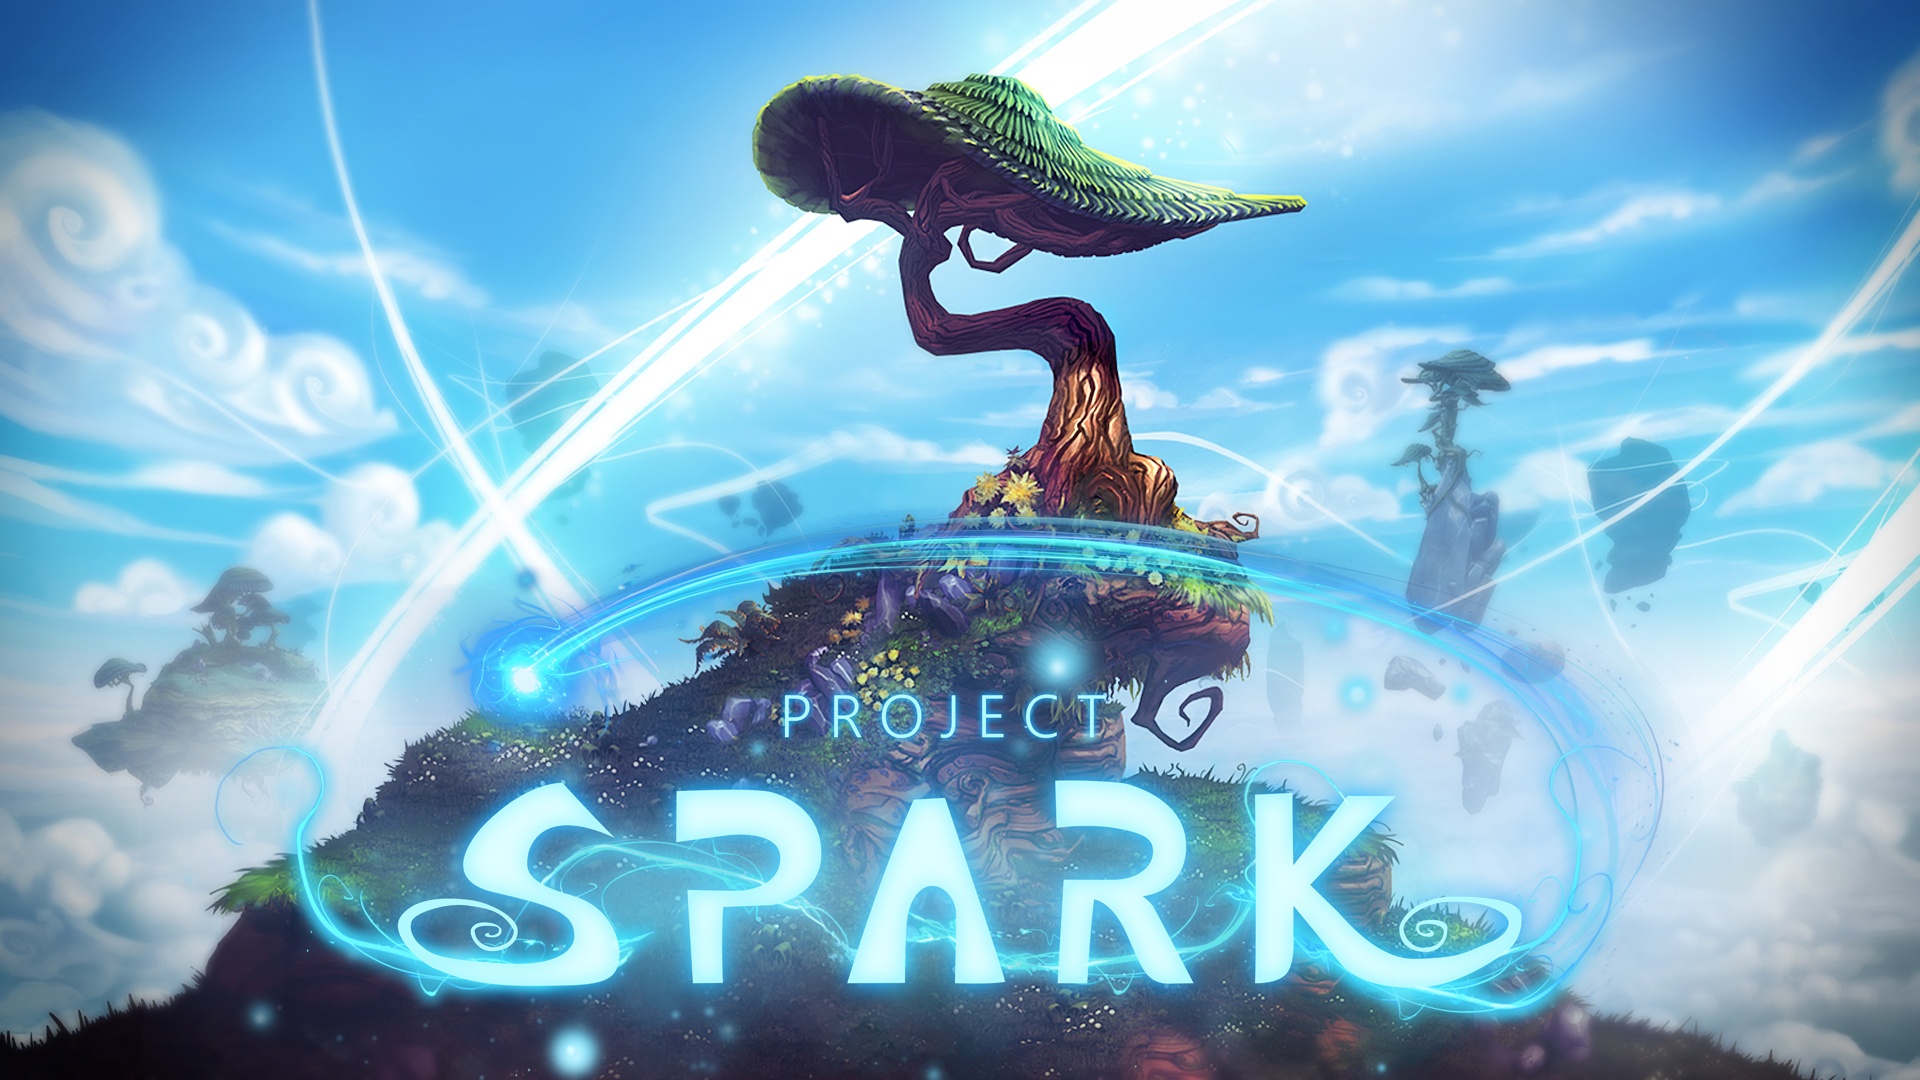 Project Spark Game Wallpaper HD Imagebank Biz